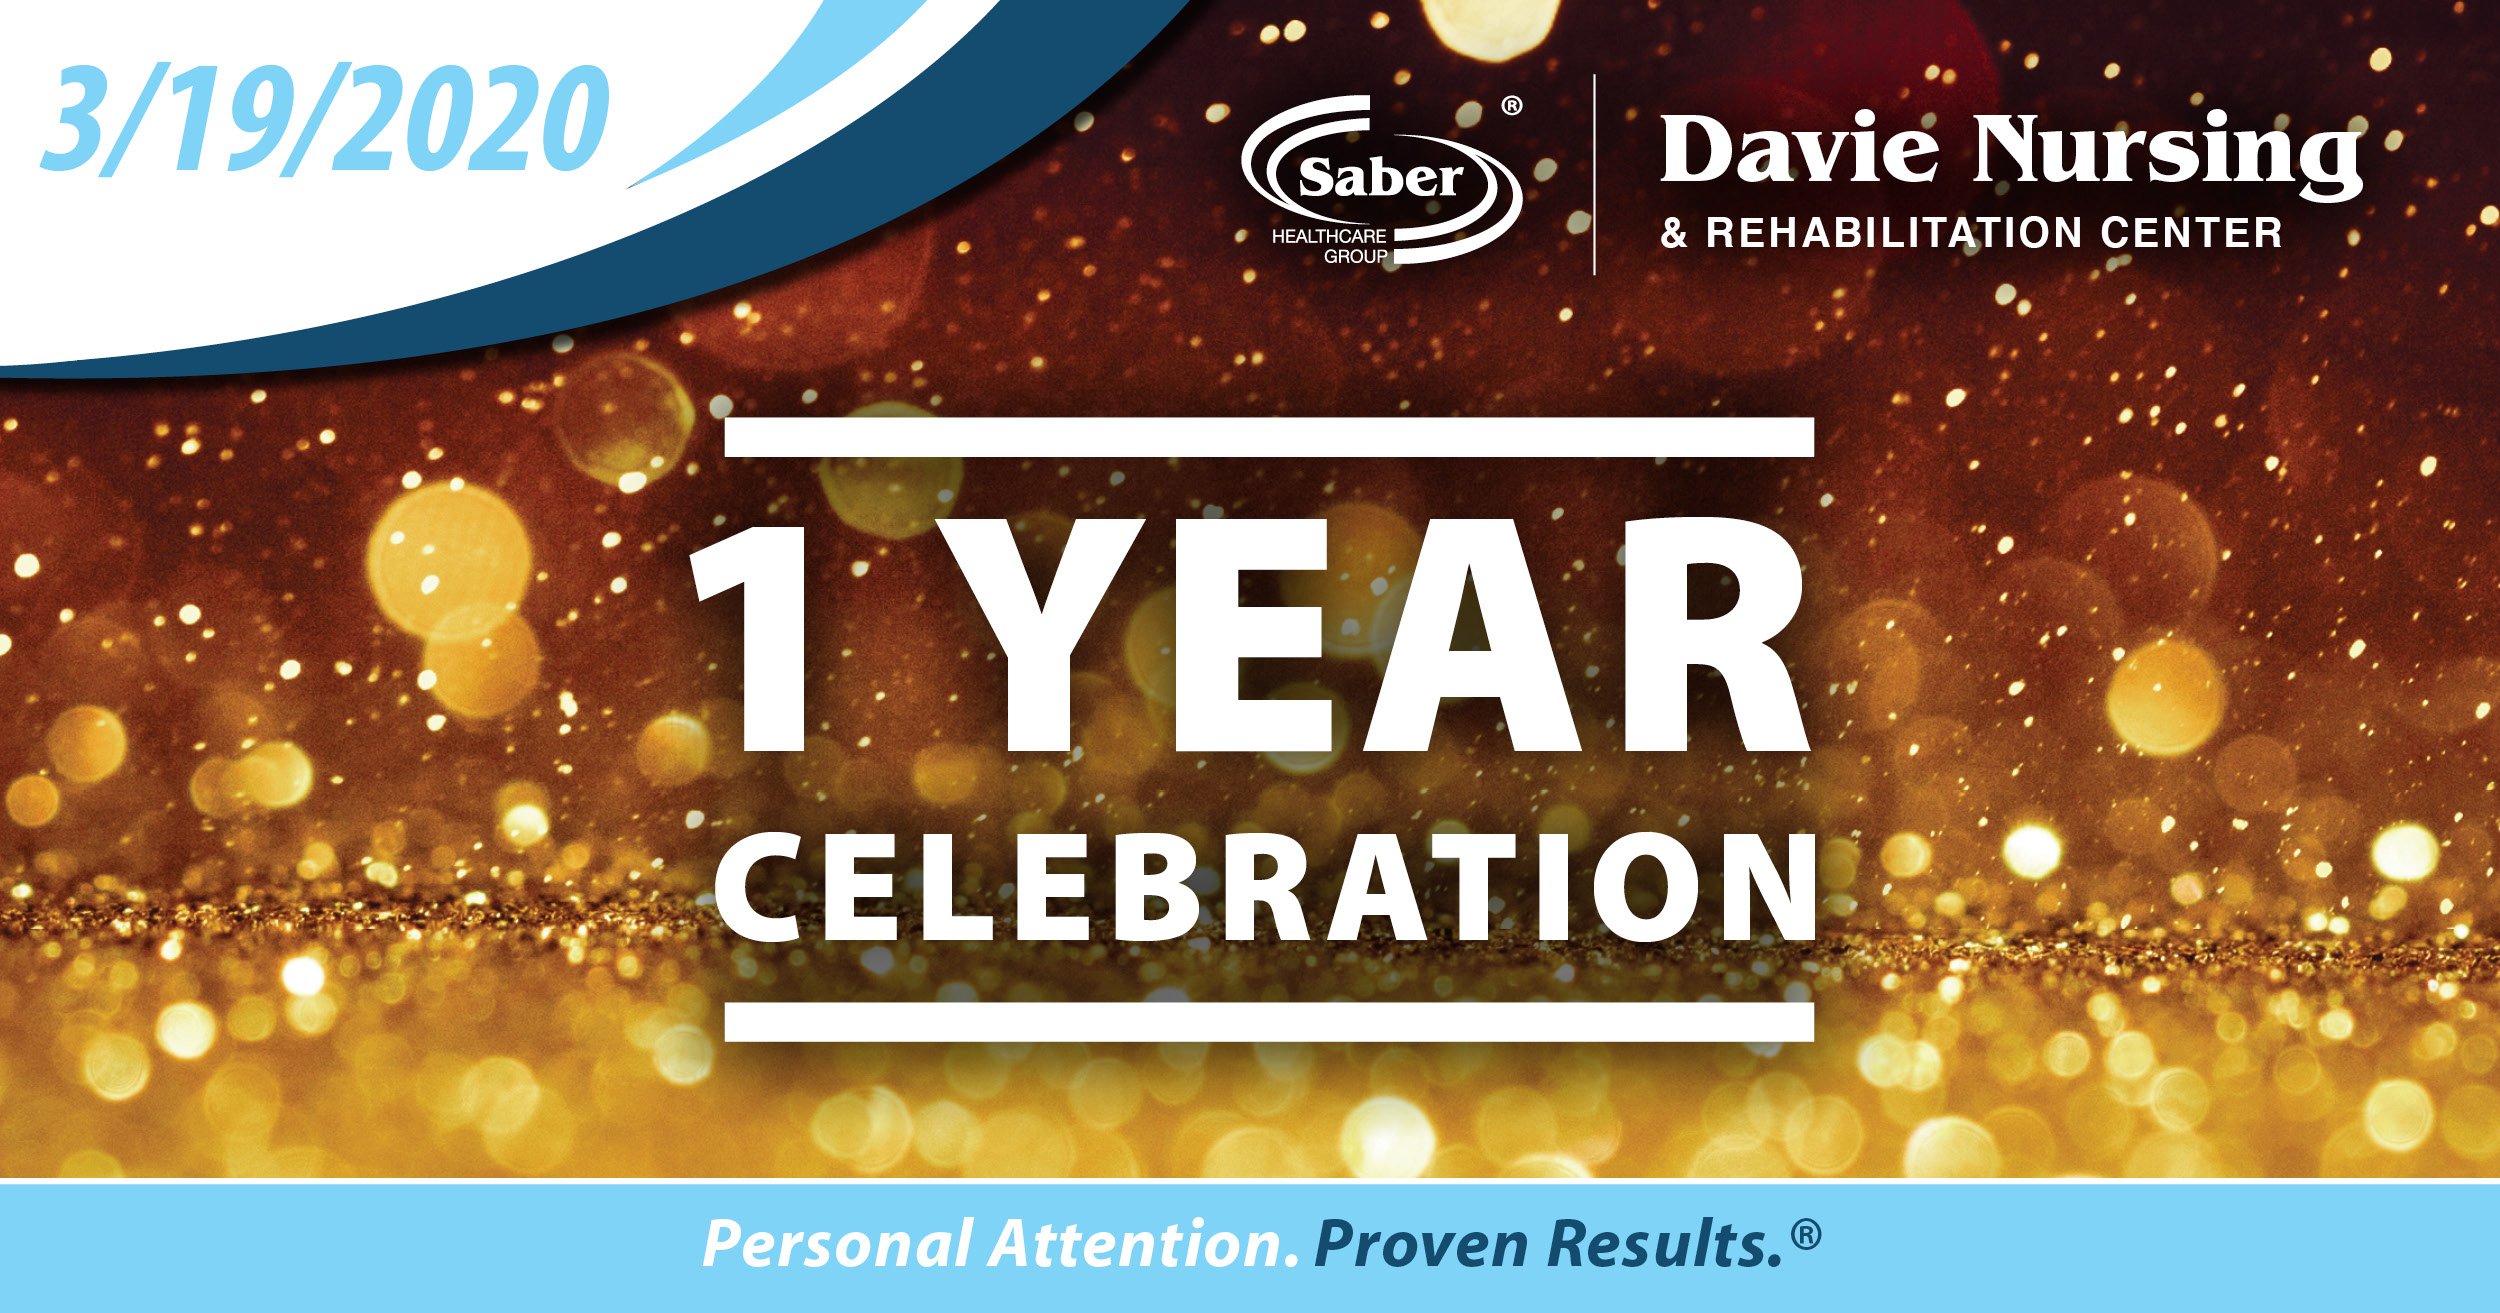 One Year Celebration at Davie Nursing and Rehab Center